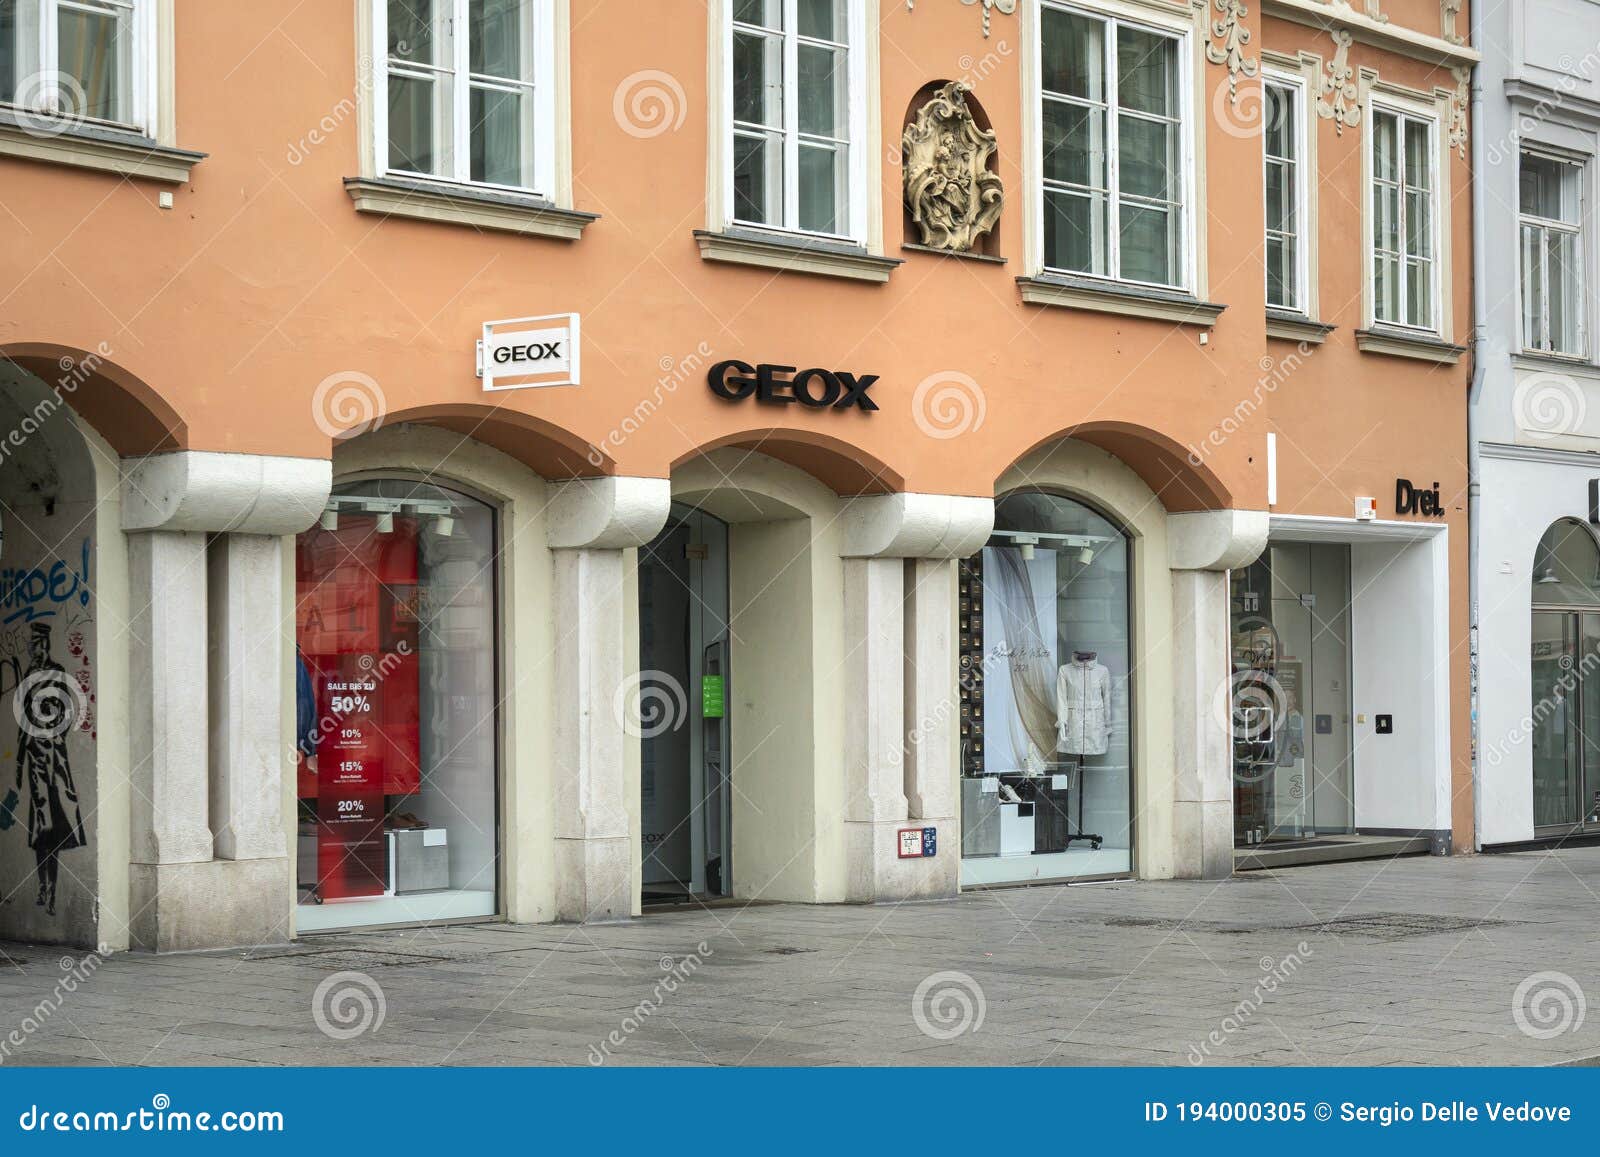 Geox Brand Shop Window in Graz Editorial Image - of exterior: 194000305